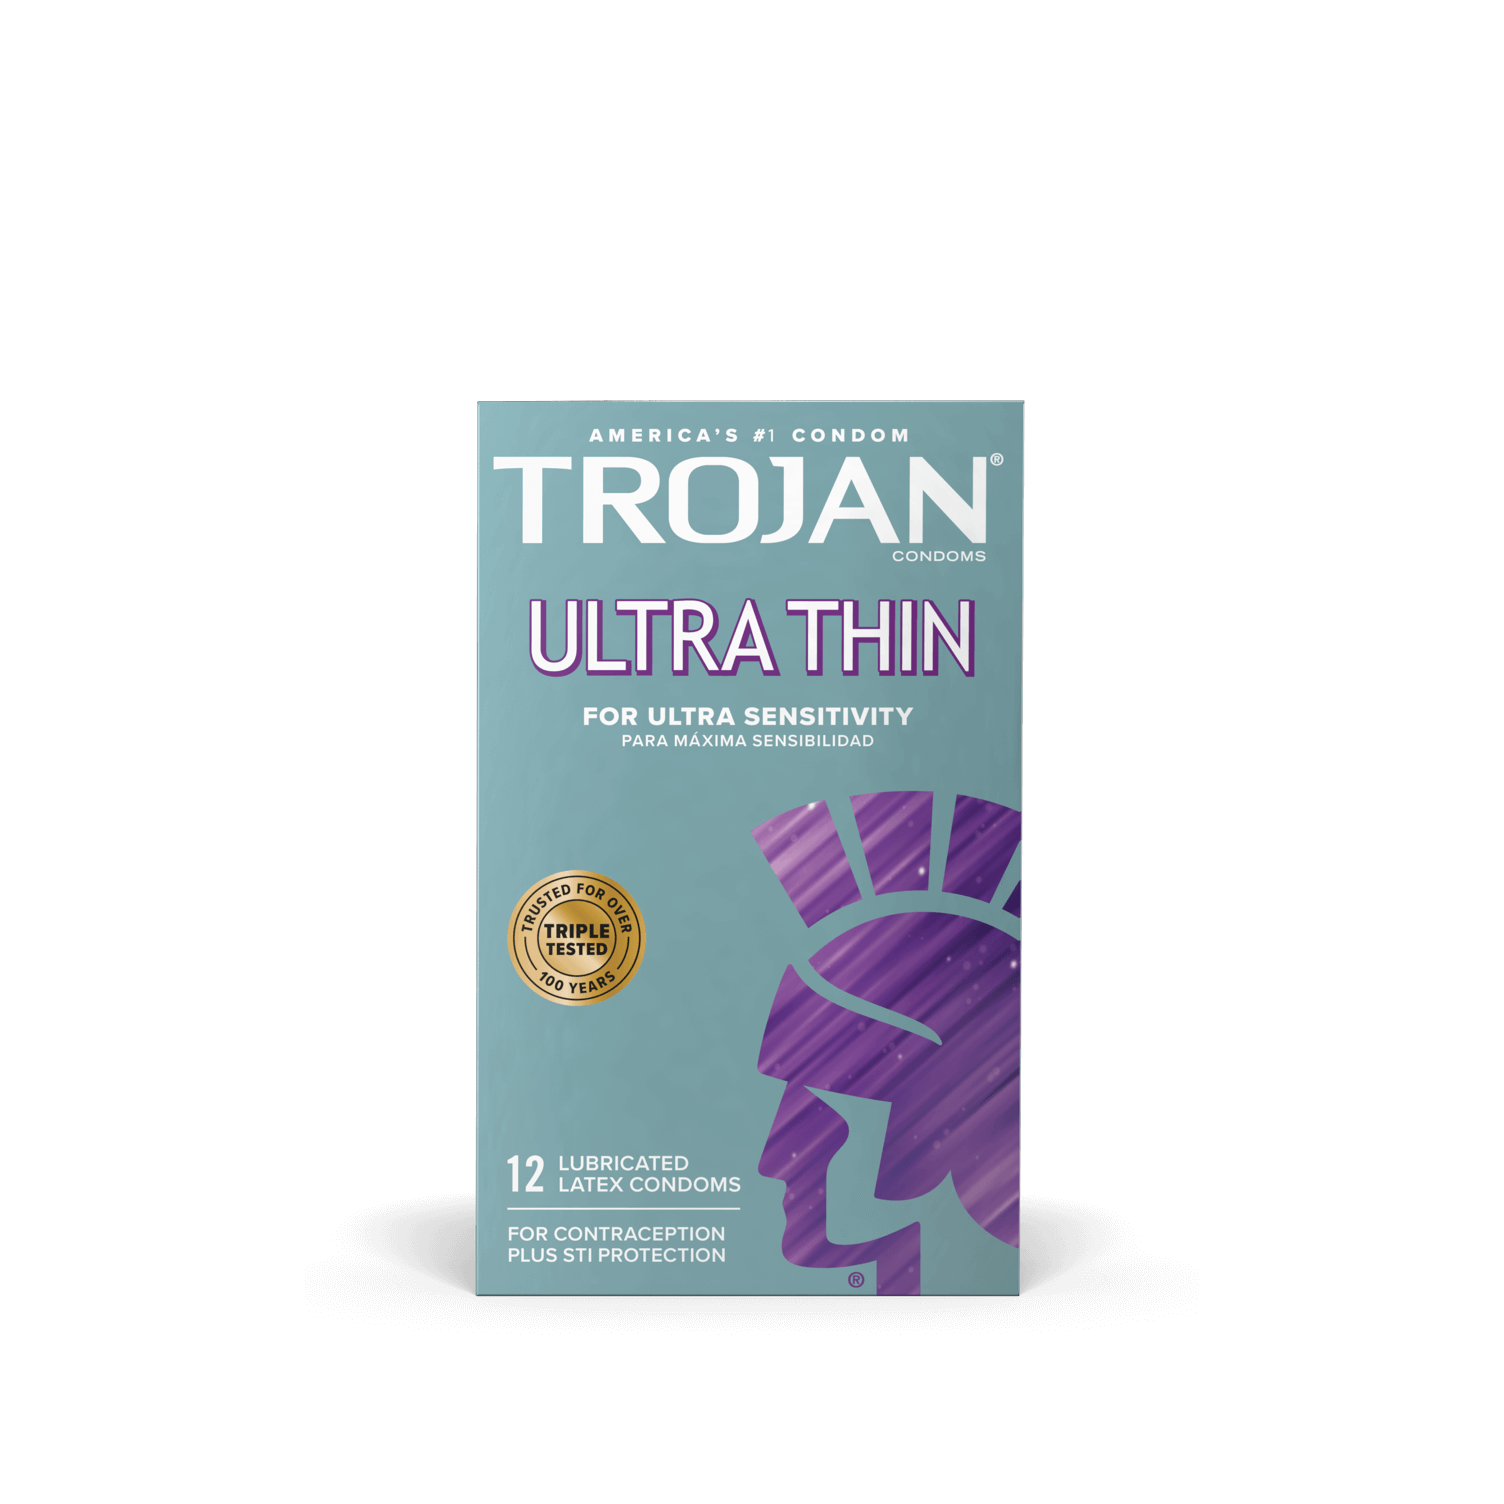 https://www.trojanbrands.com/images/pdp/hero/trojan-ultra-thin-lubricated-condoms/hero-01.png